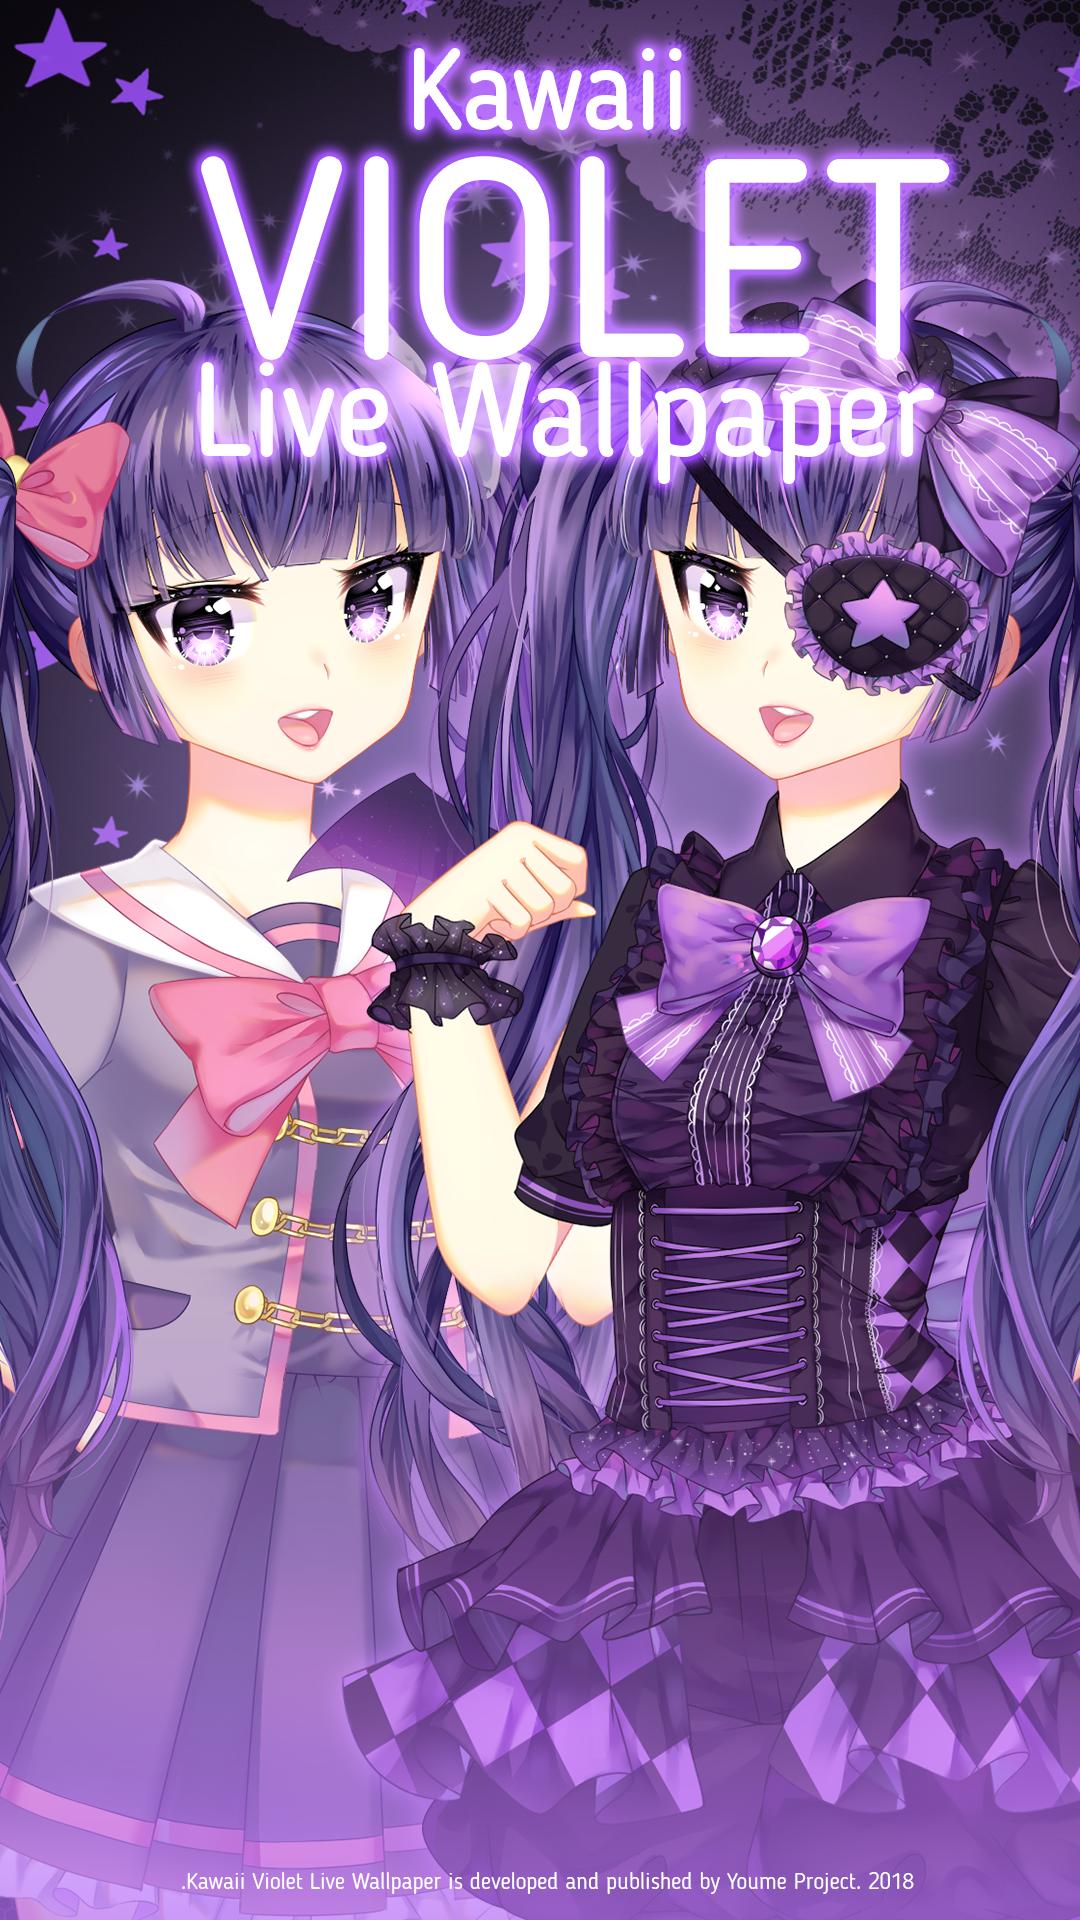 Violet Kawaii Live Wallpaper for Android